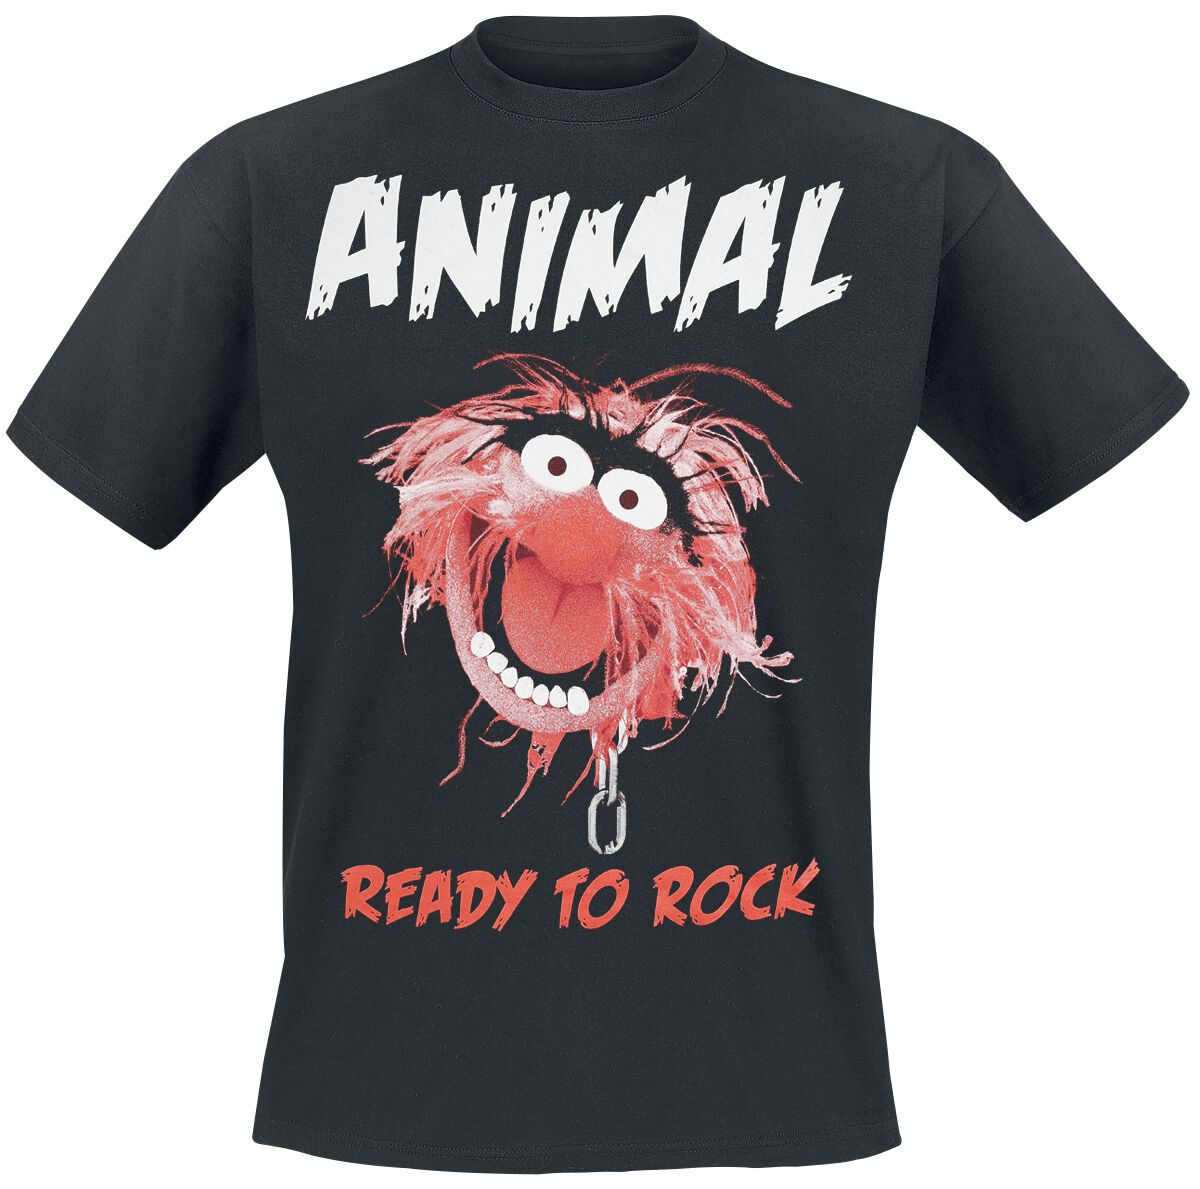 Die Muppets Animal - Ready To Rock T-Shirt schwarz in L